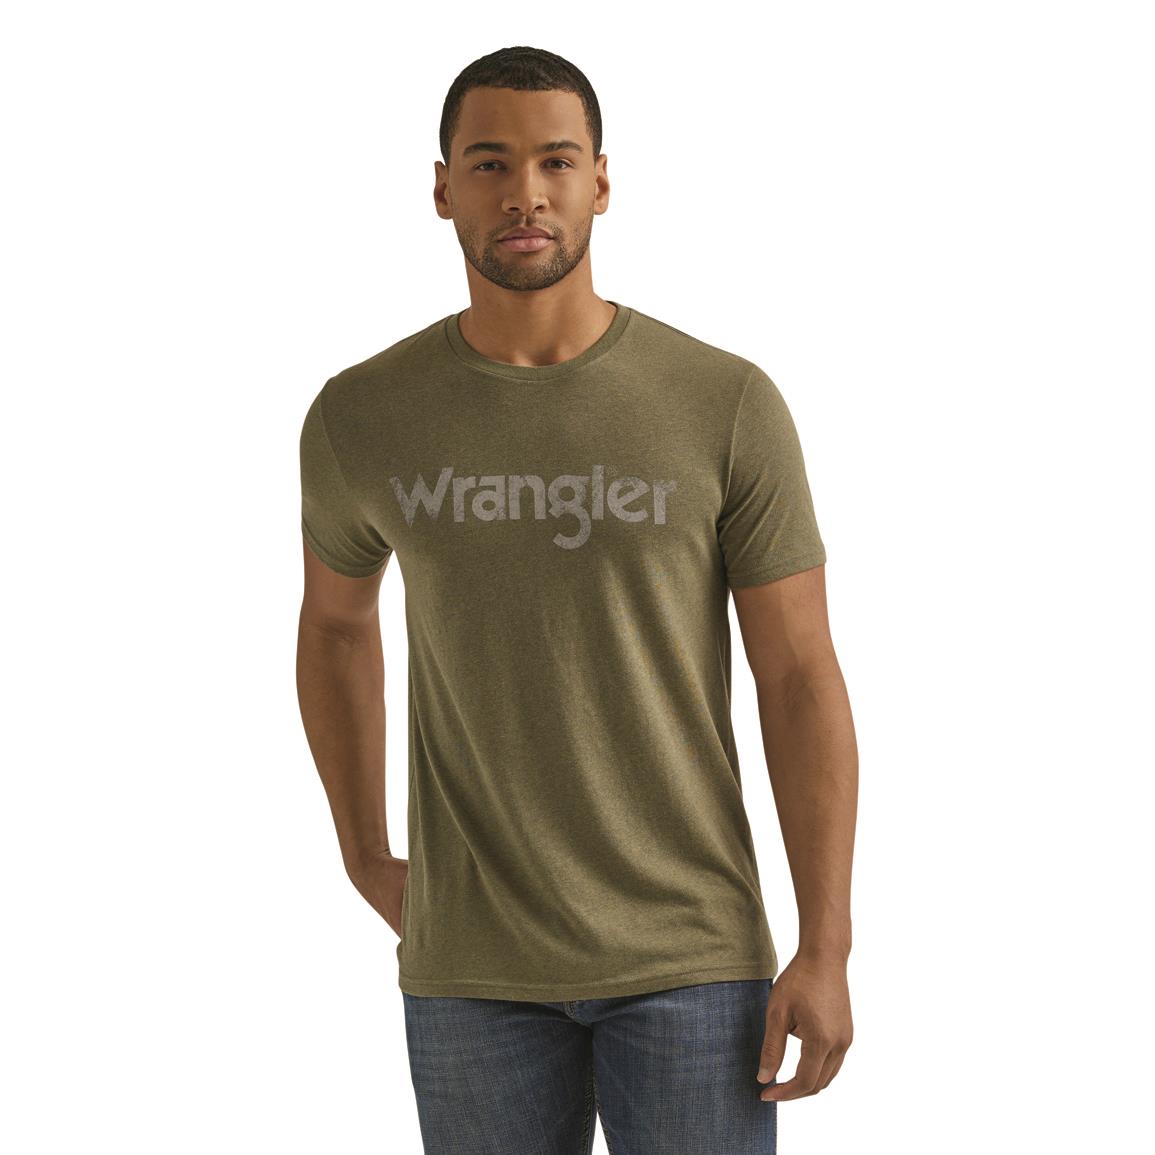 Wrangler Men's Logo T-Shirt, Sage Heather